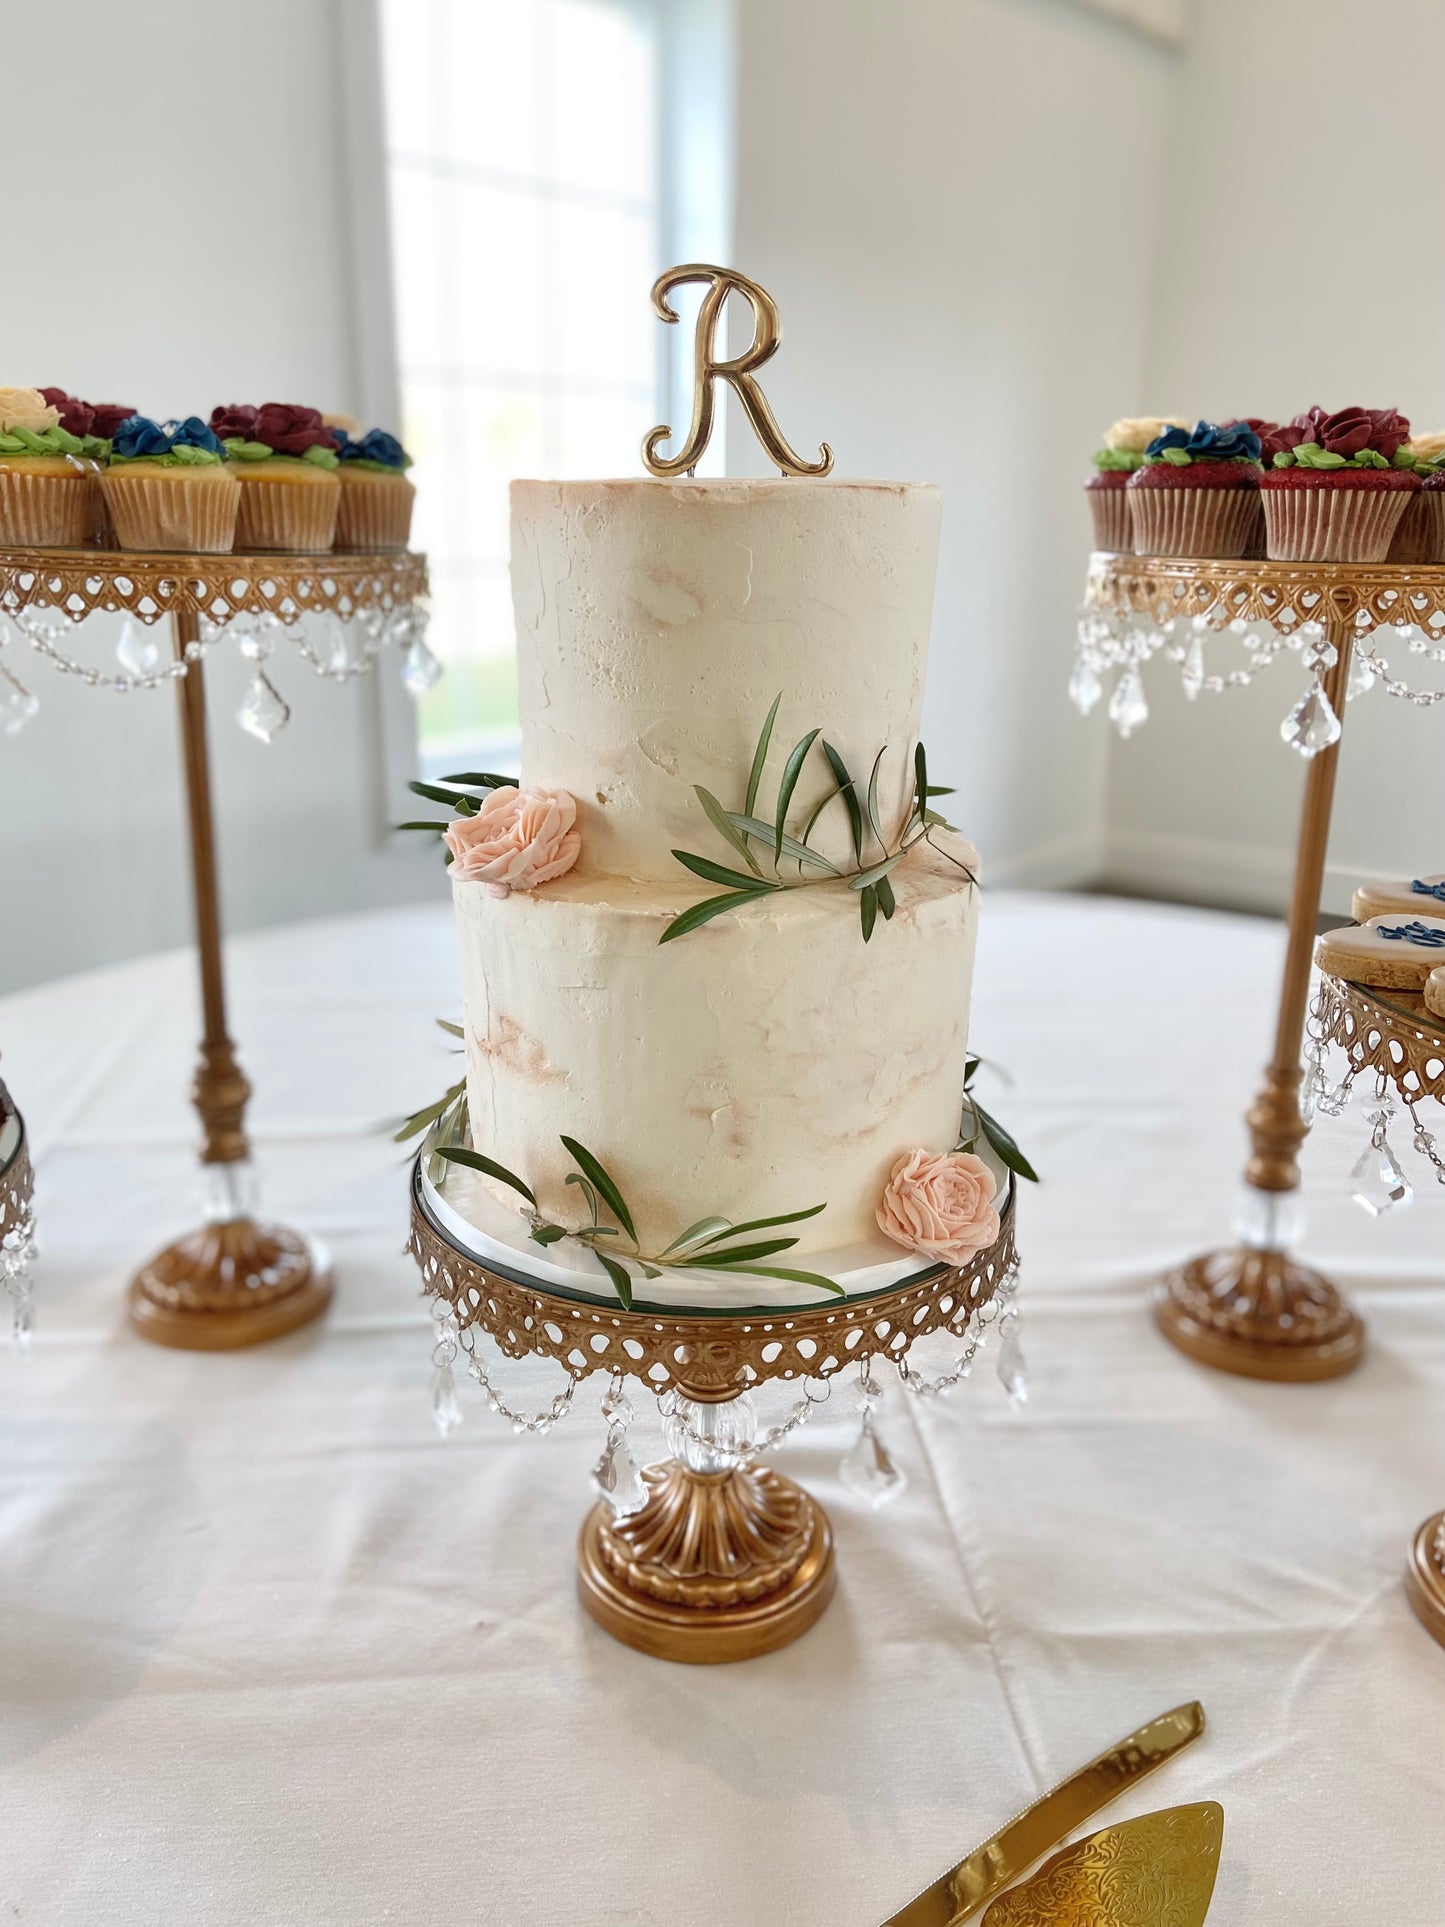 Romantic Rustic Wedding Cake